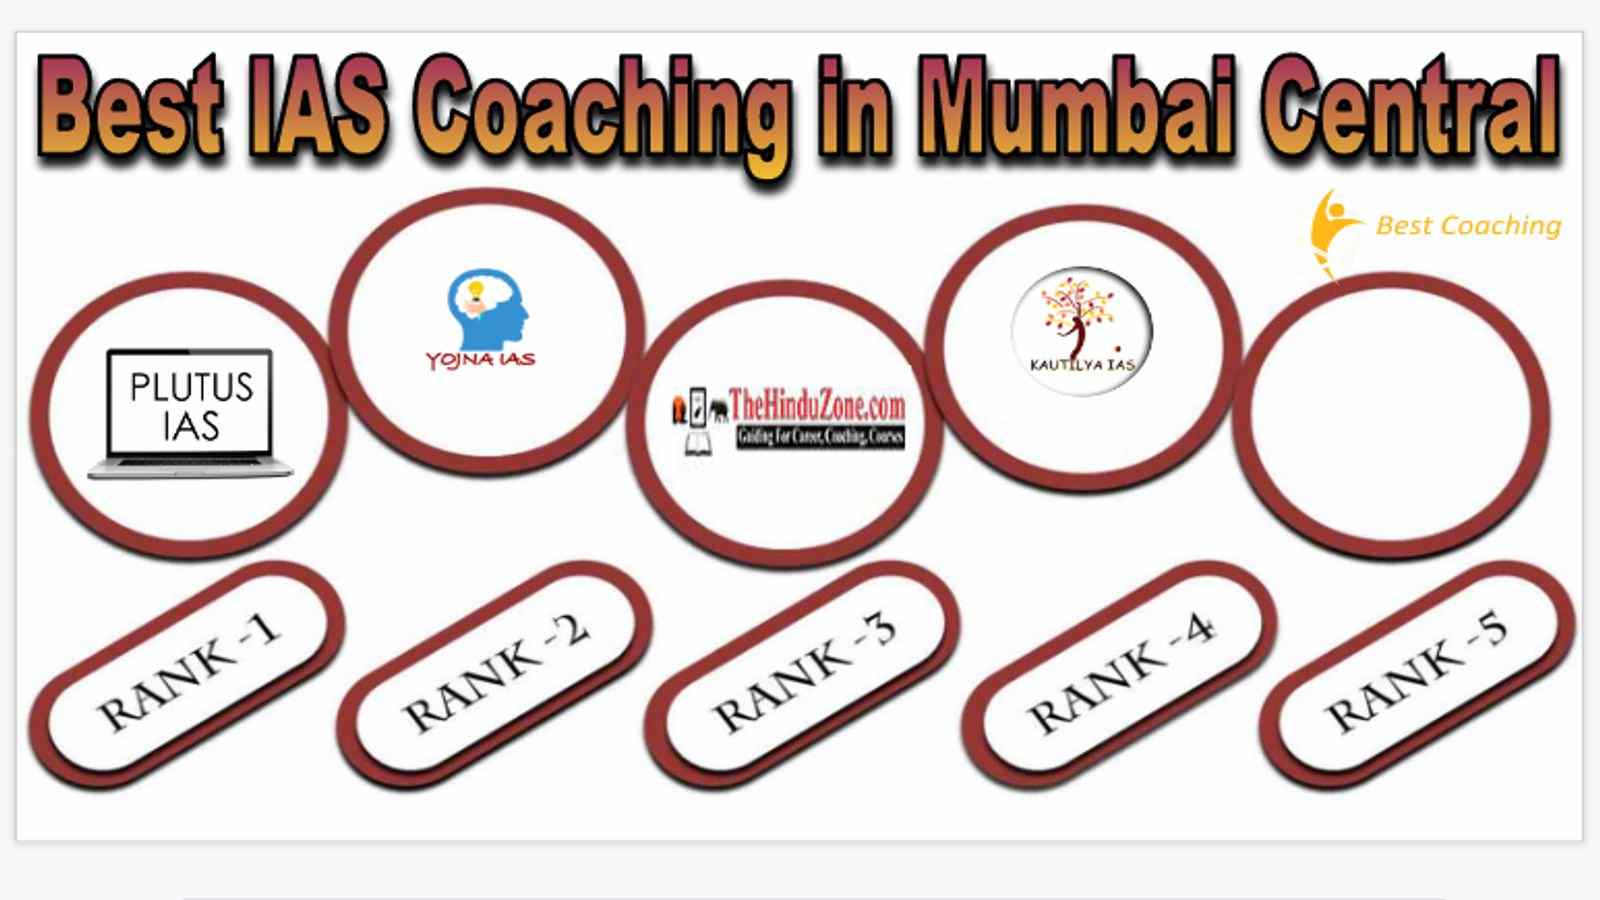 Best IAS Coaching in Mumbai Central